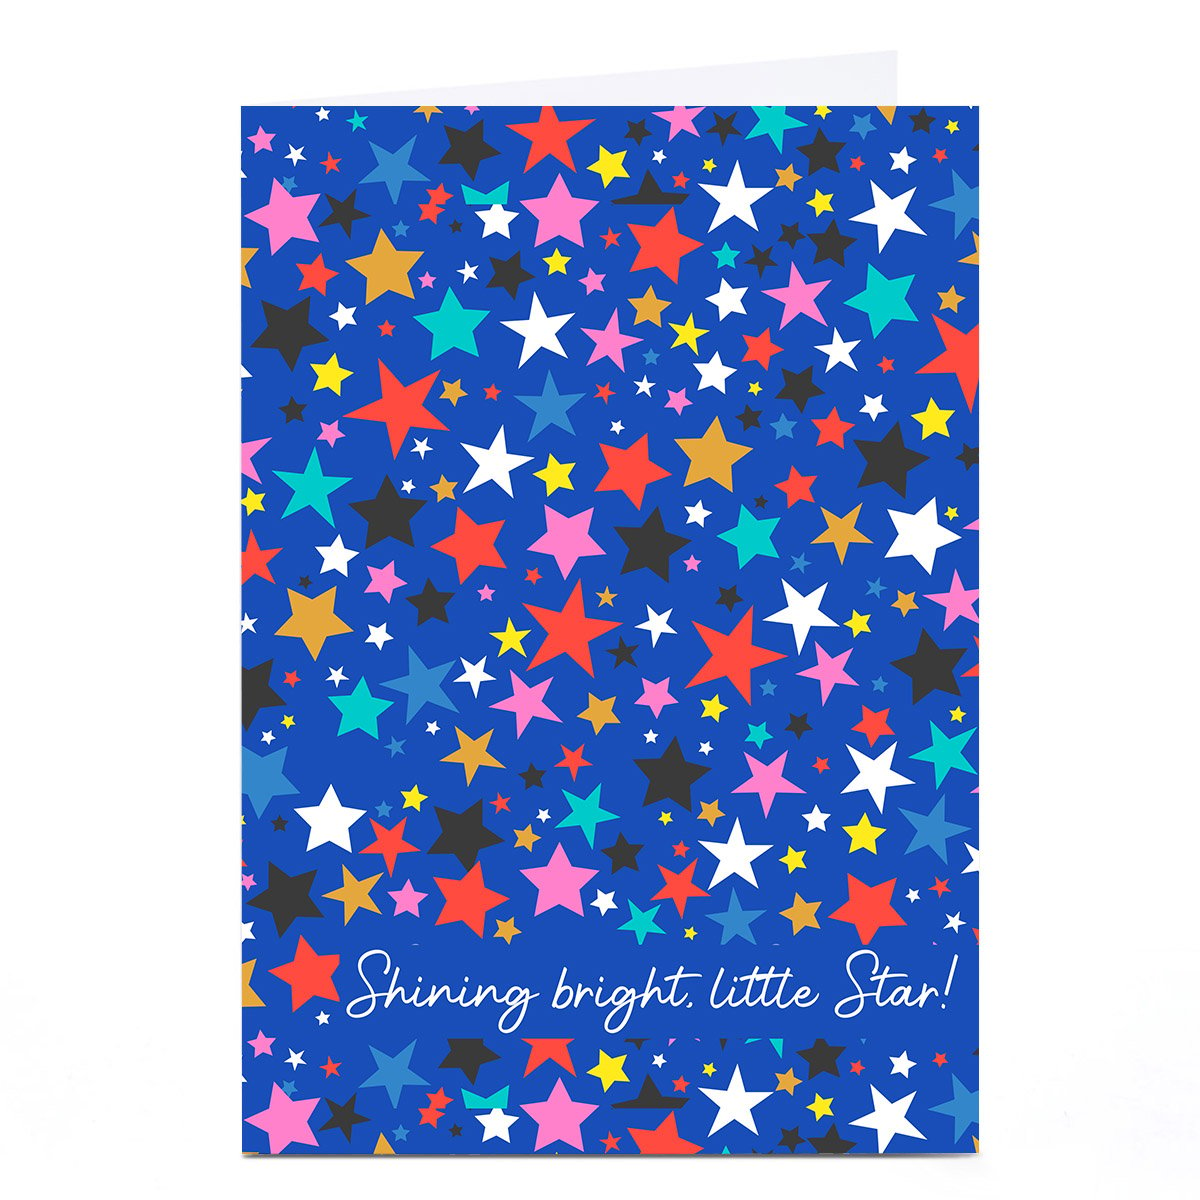 Personalised Rachel Griffin Birthday Card - Shining Bright, Little Star!